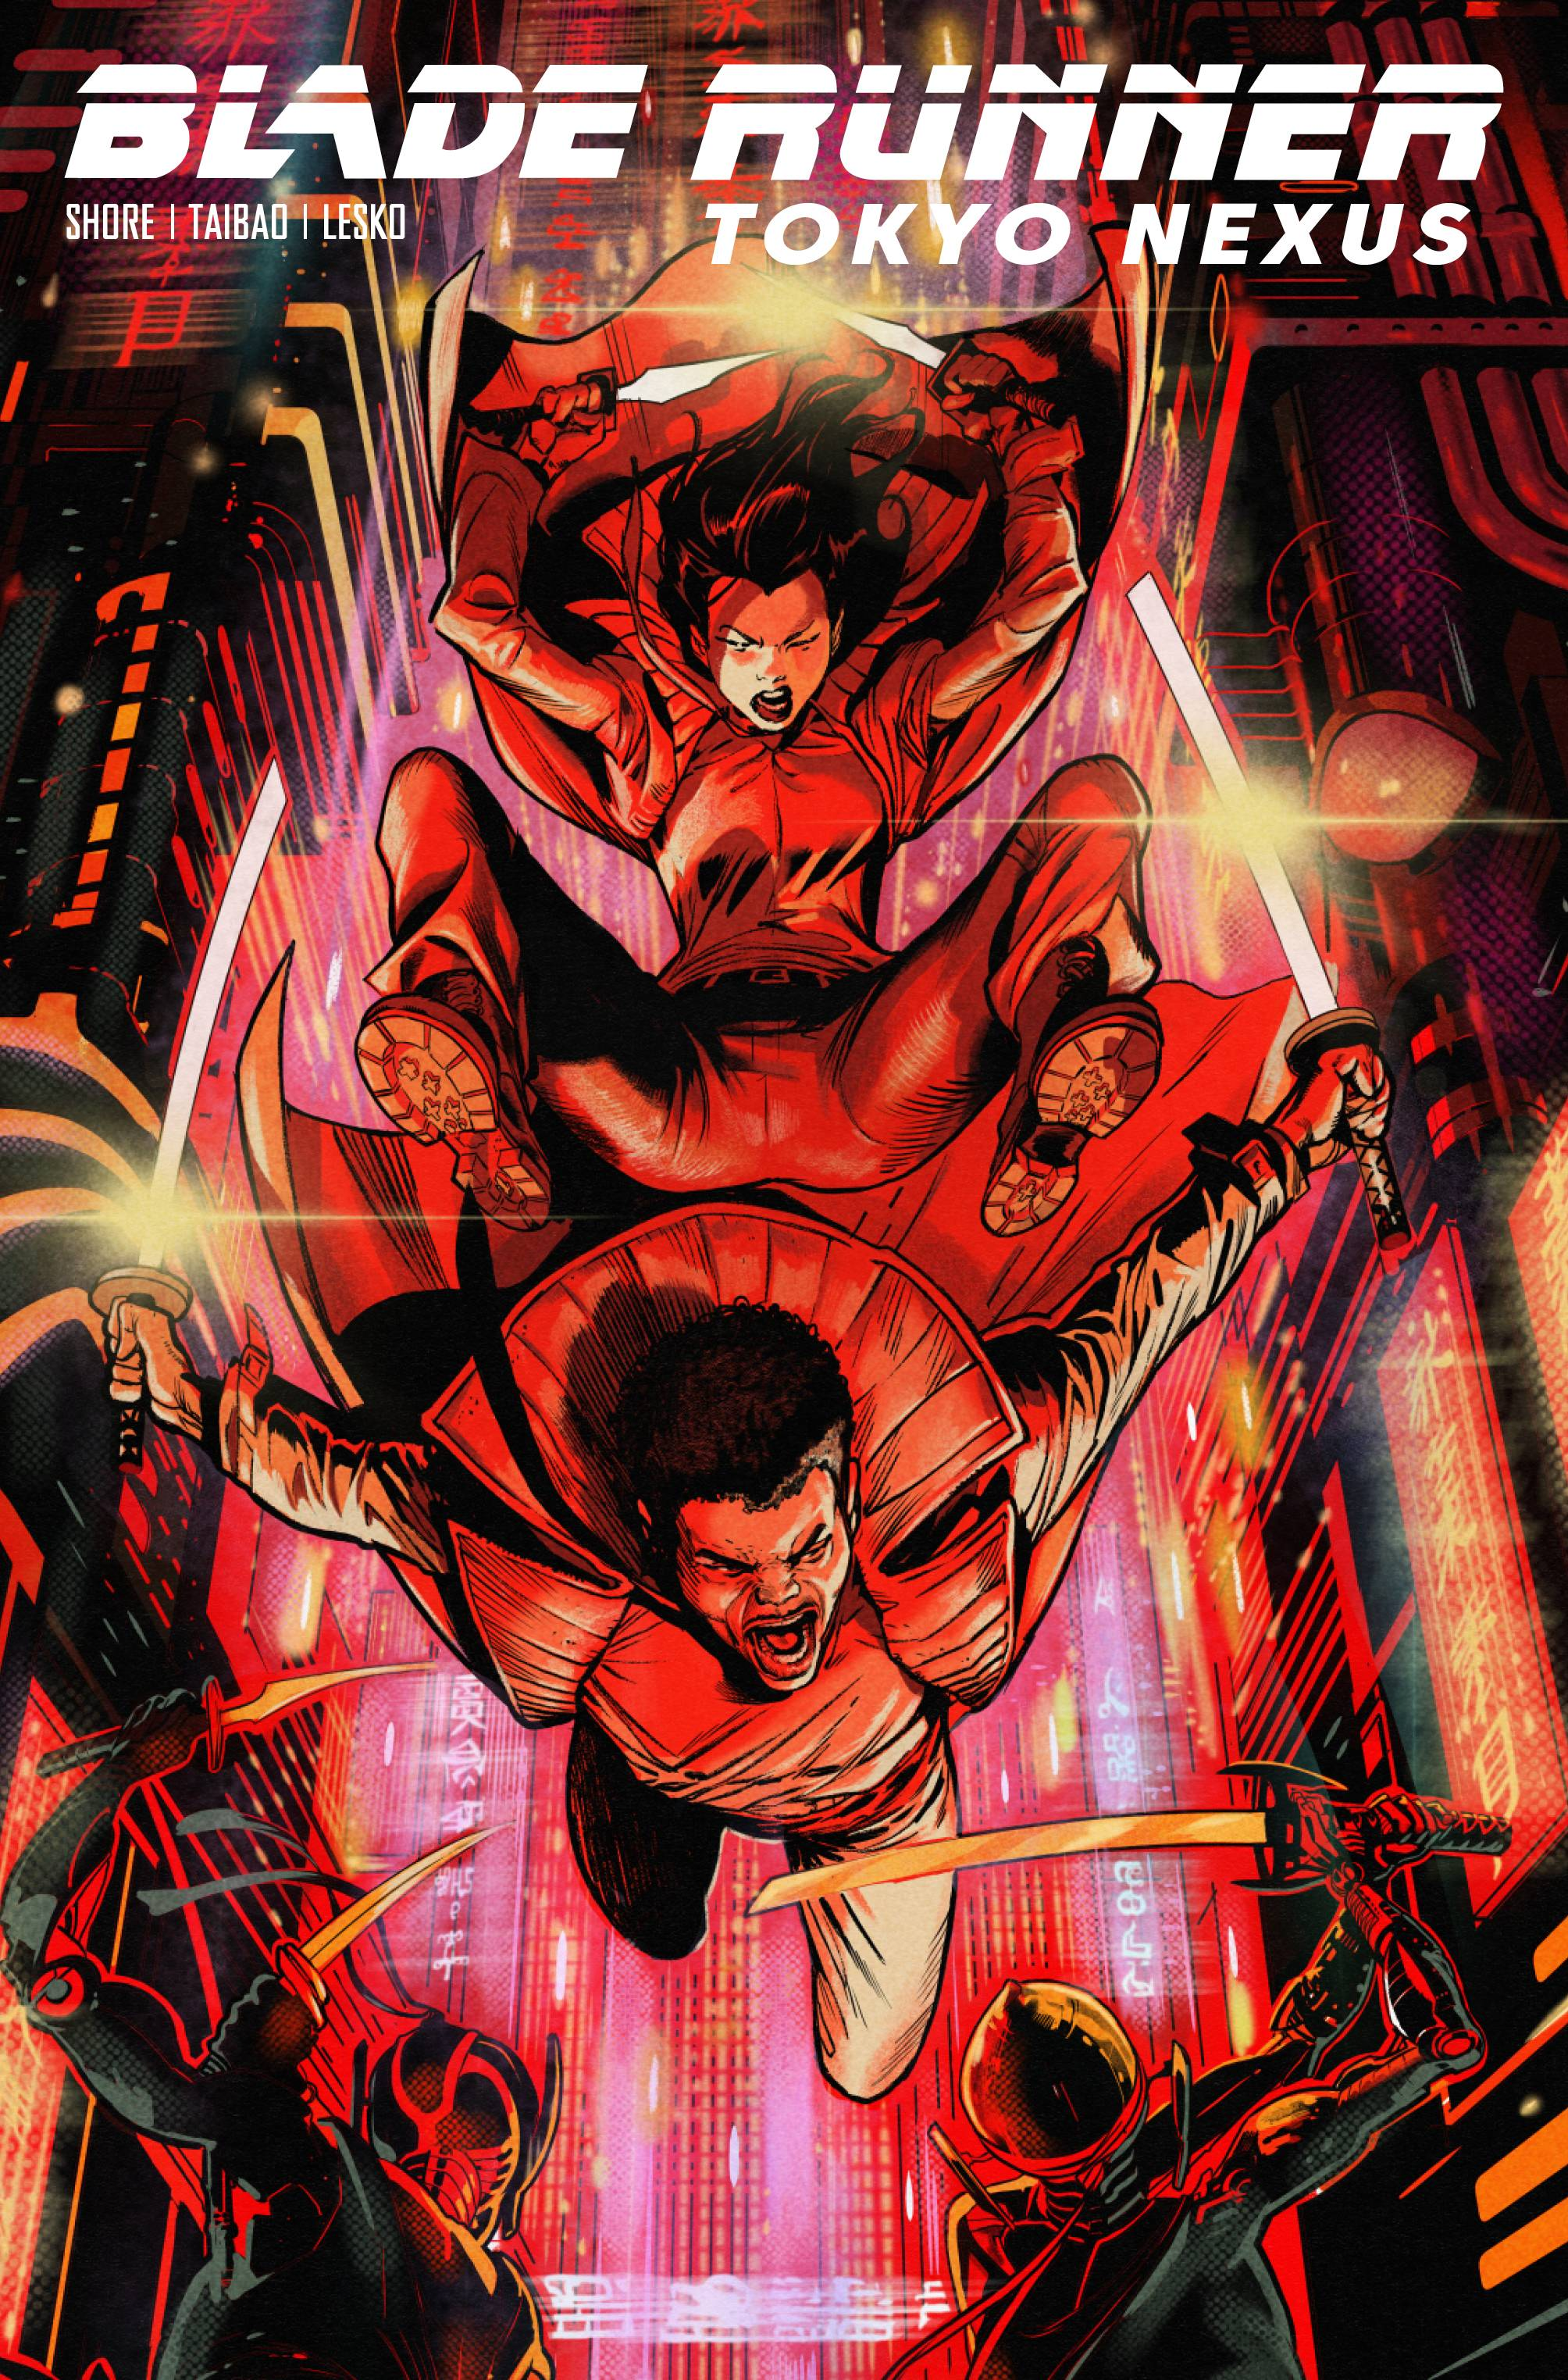 Blade Runner Tokyo Nexus #1 Cover D Dagnino (Mature) (Of 4)